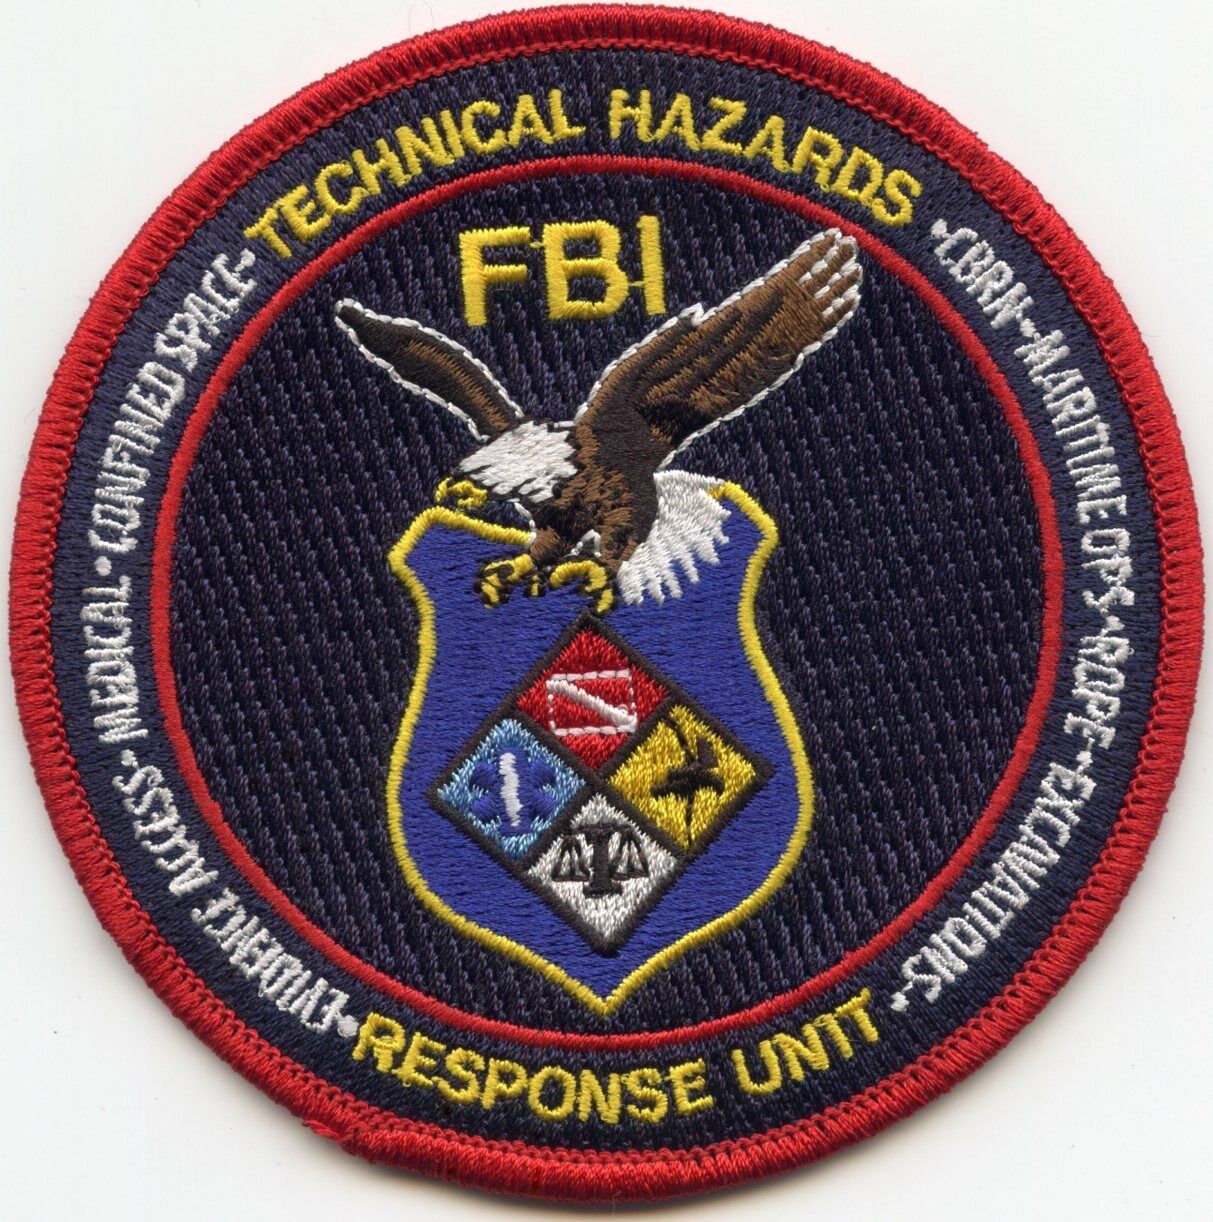 Fbi Technical Hazards Response Unit Washington Dc Colorful Police Patch